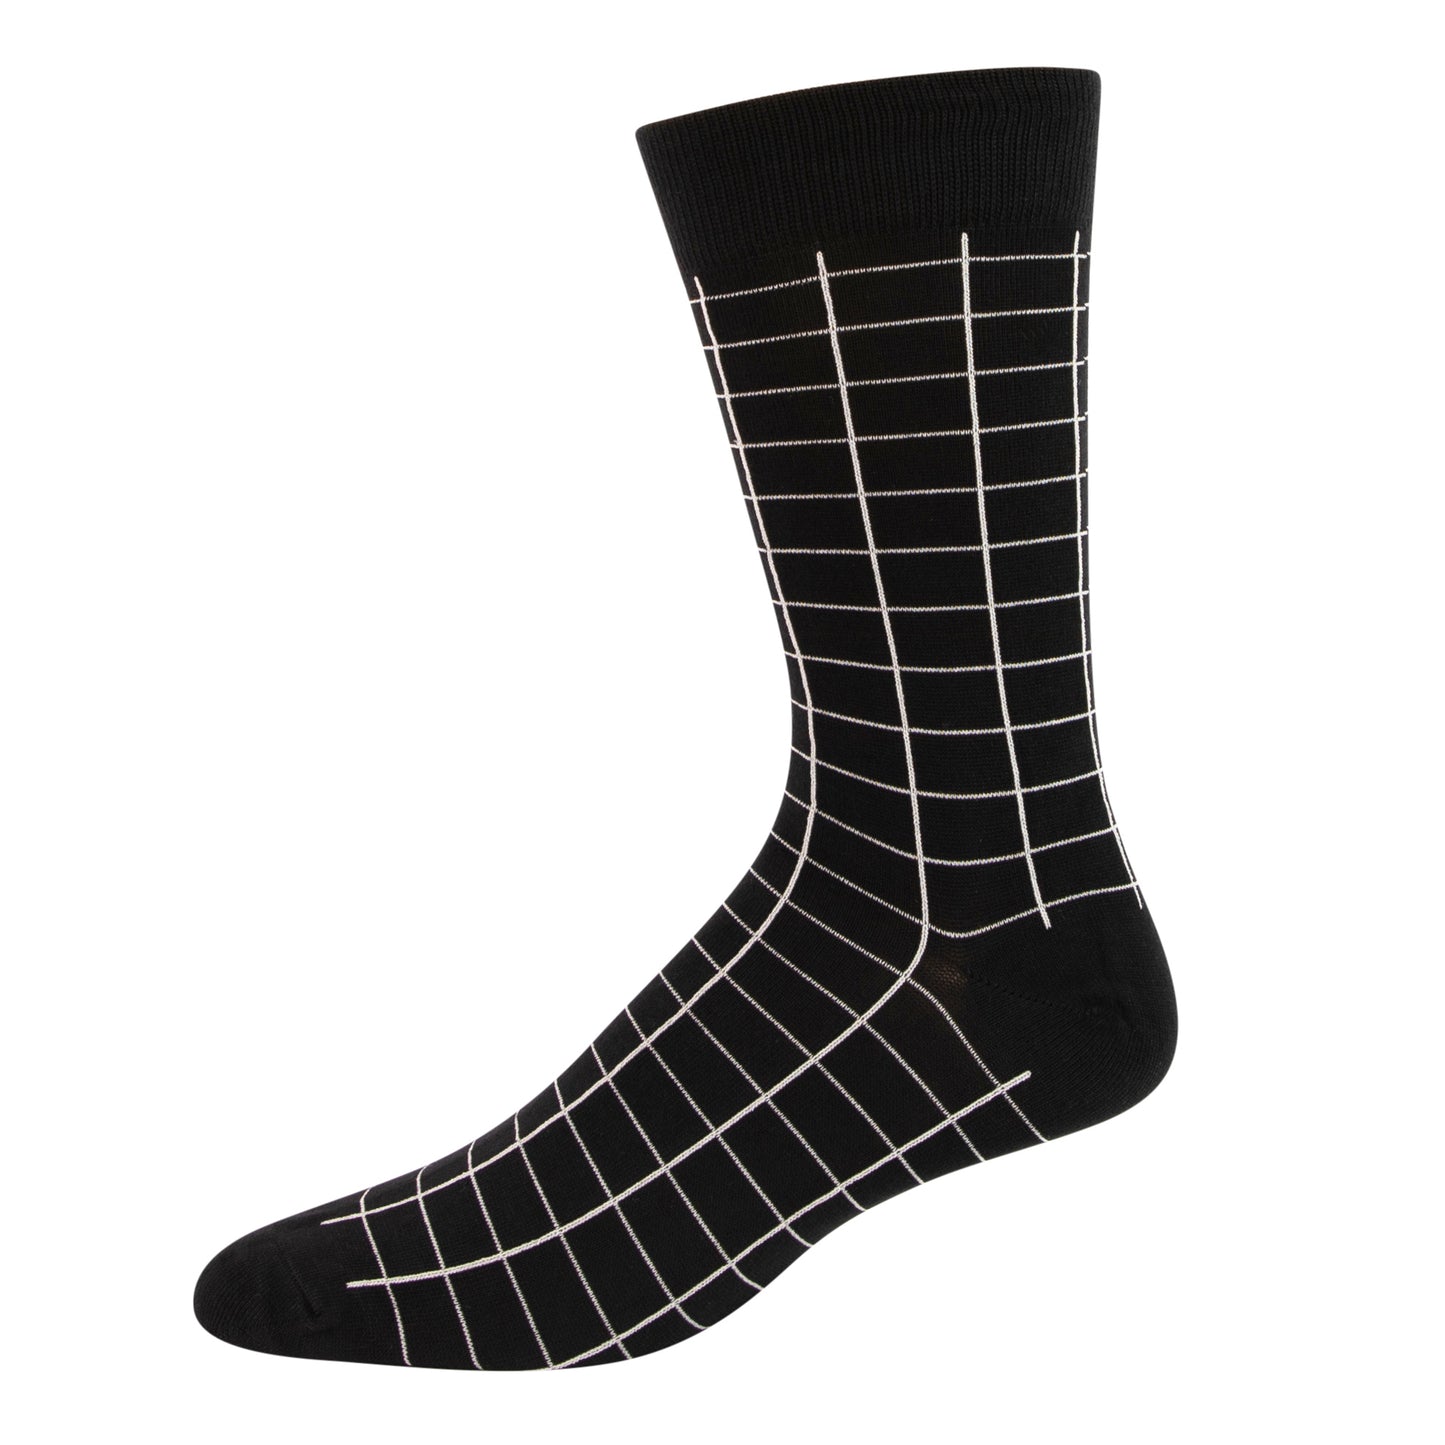 8-Pack Men's Bamboo Super Soft Crew Socks - Anti Odor Smell Free Lightweight Breathable Casual Socks